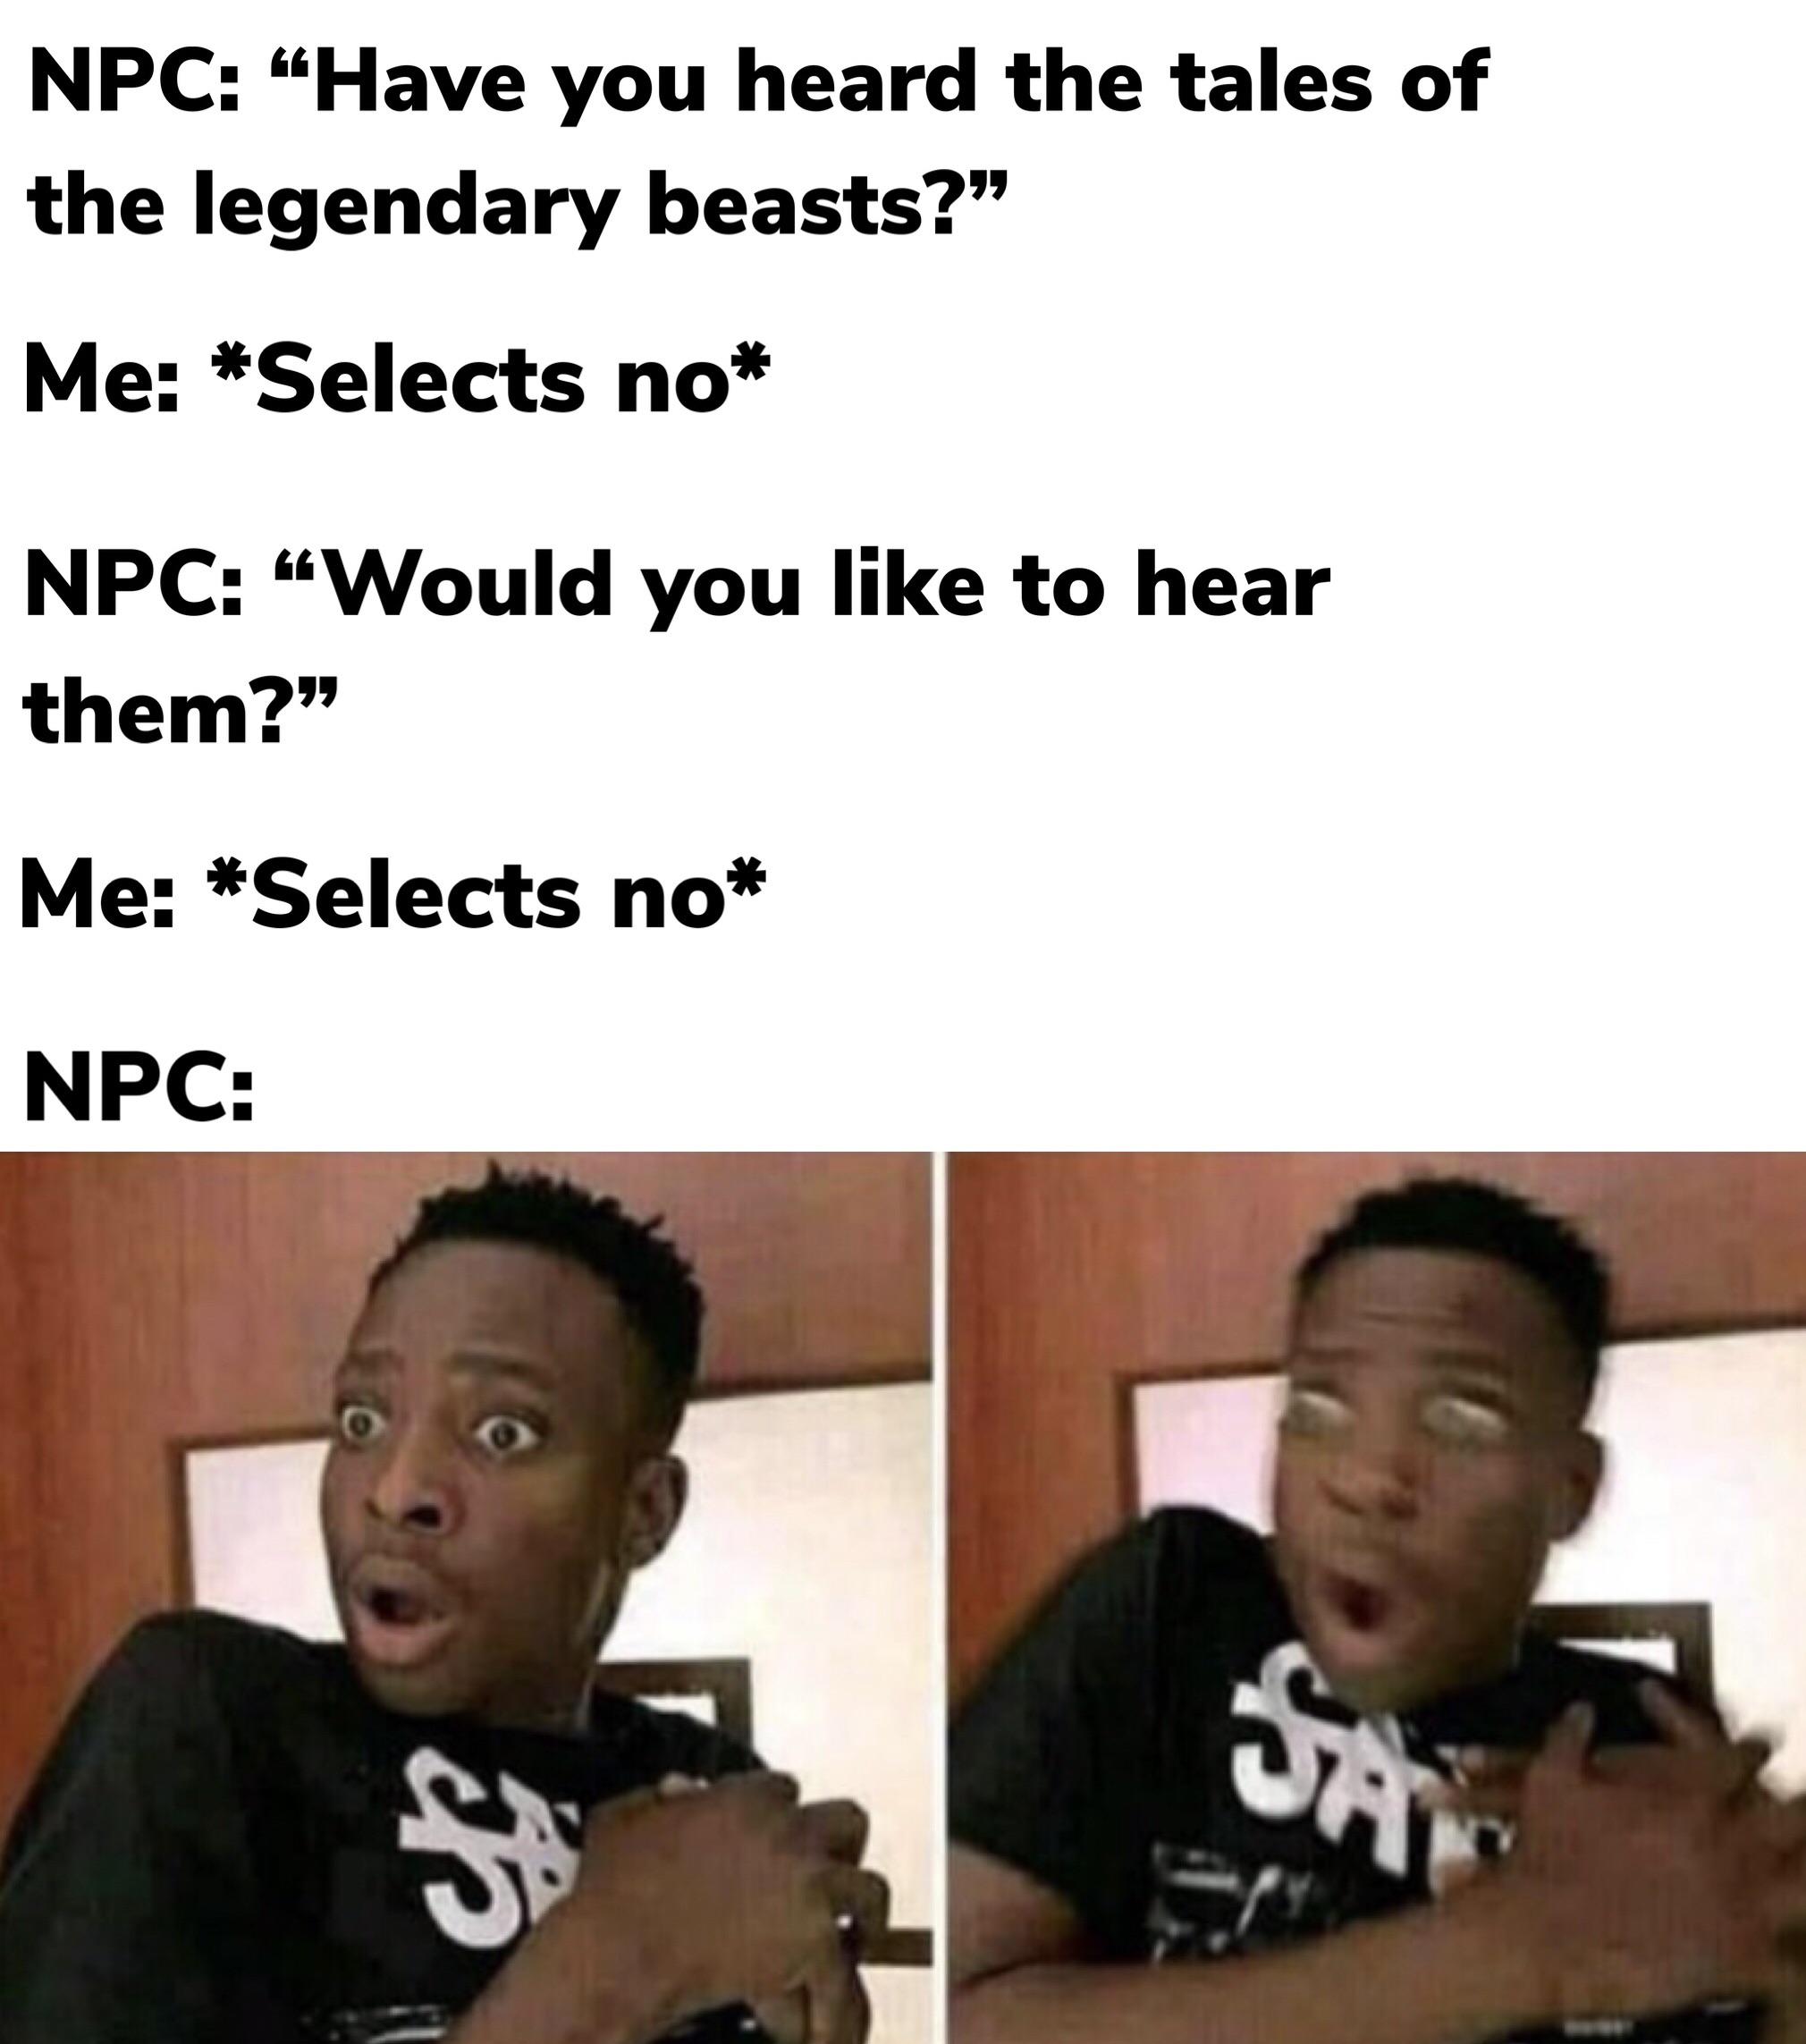 funny and dank memes  - devil surprised meme - Npc "Have you heard the tales of the legendary beasts?" Me Selects no Npc Would you to hear them?" Me Selects no Npc o San Sa